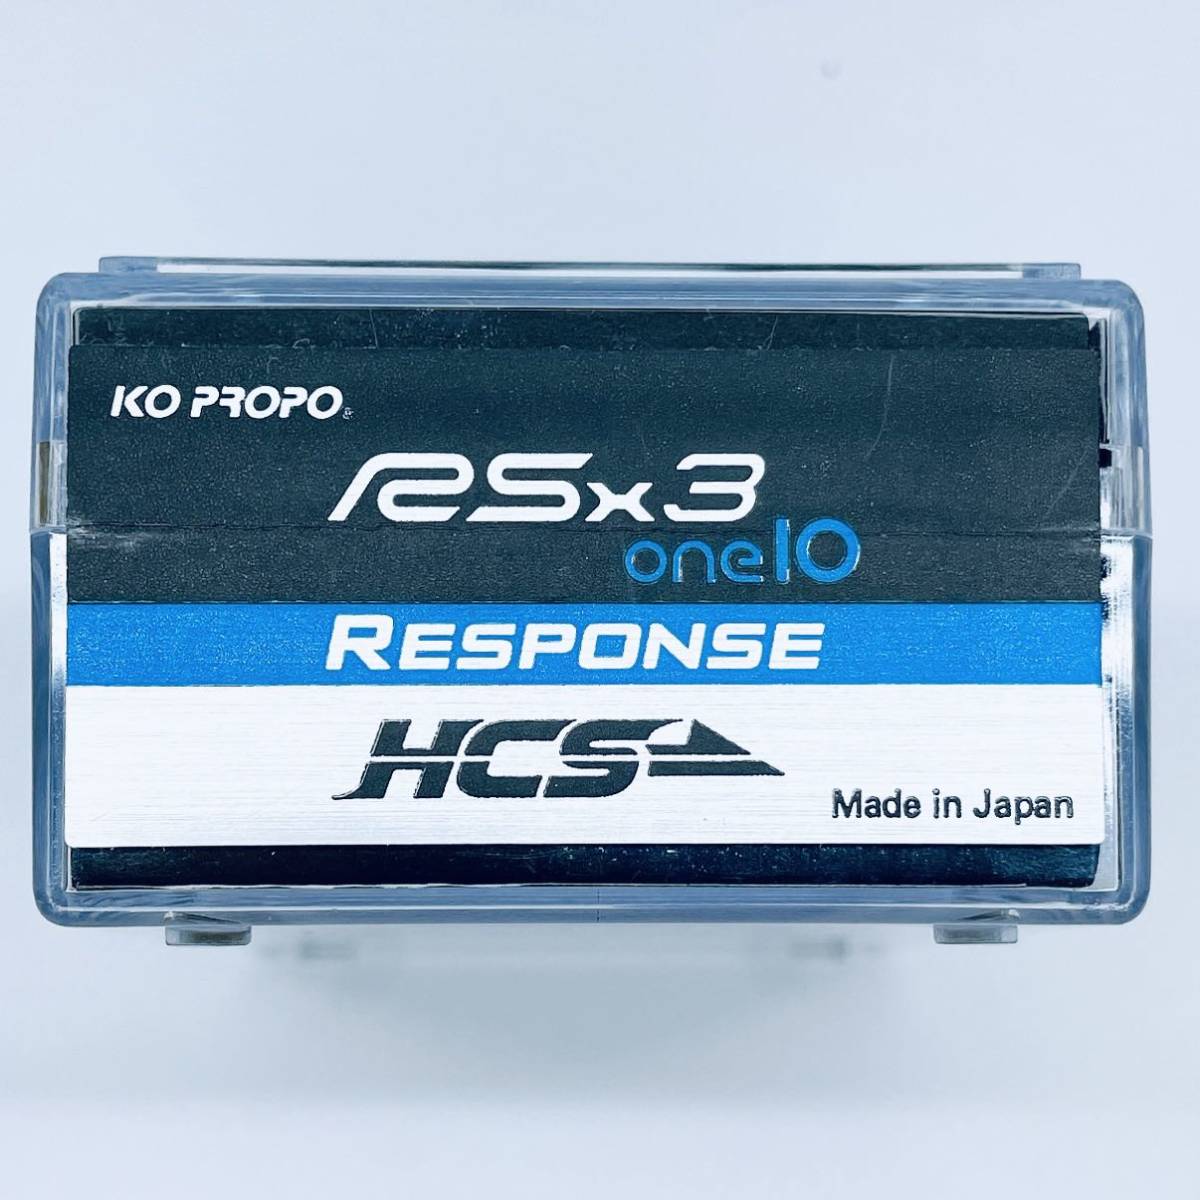 KOプロポ RSx3-one10 Response ロープロサーボ KO PROPO ツーリング バギー HCS 近藤科学